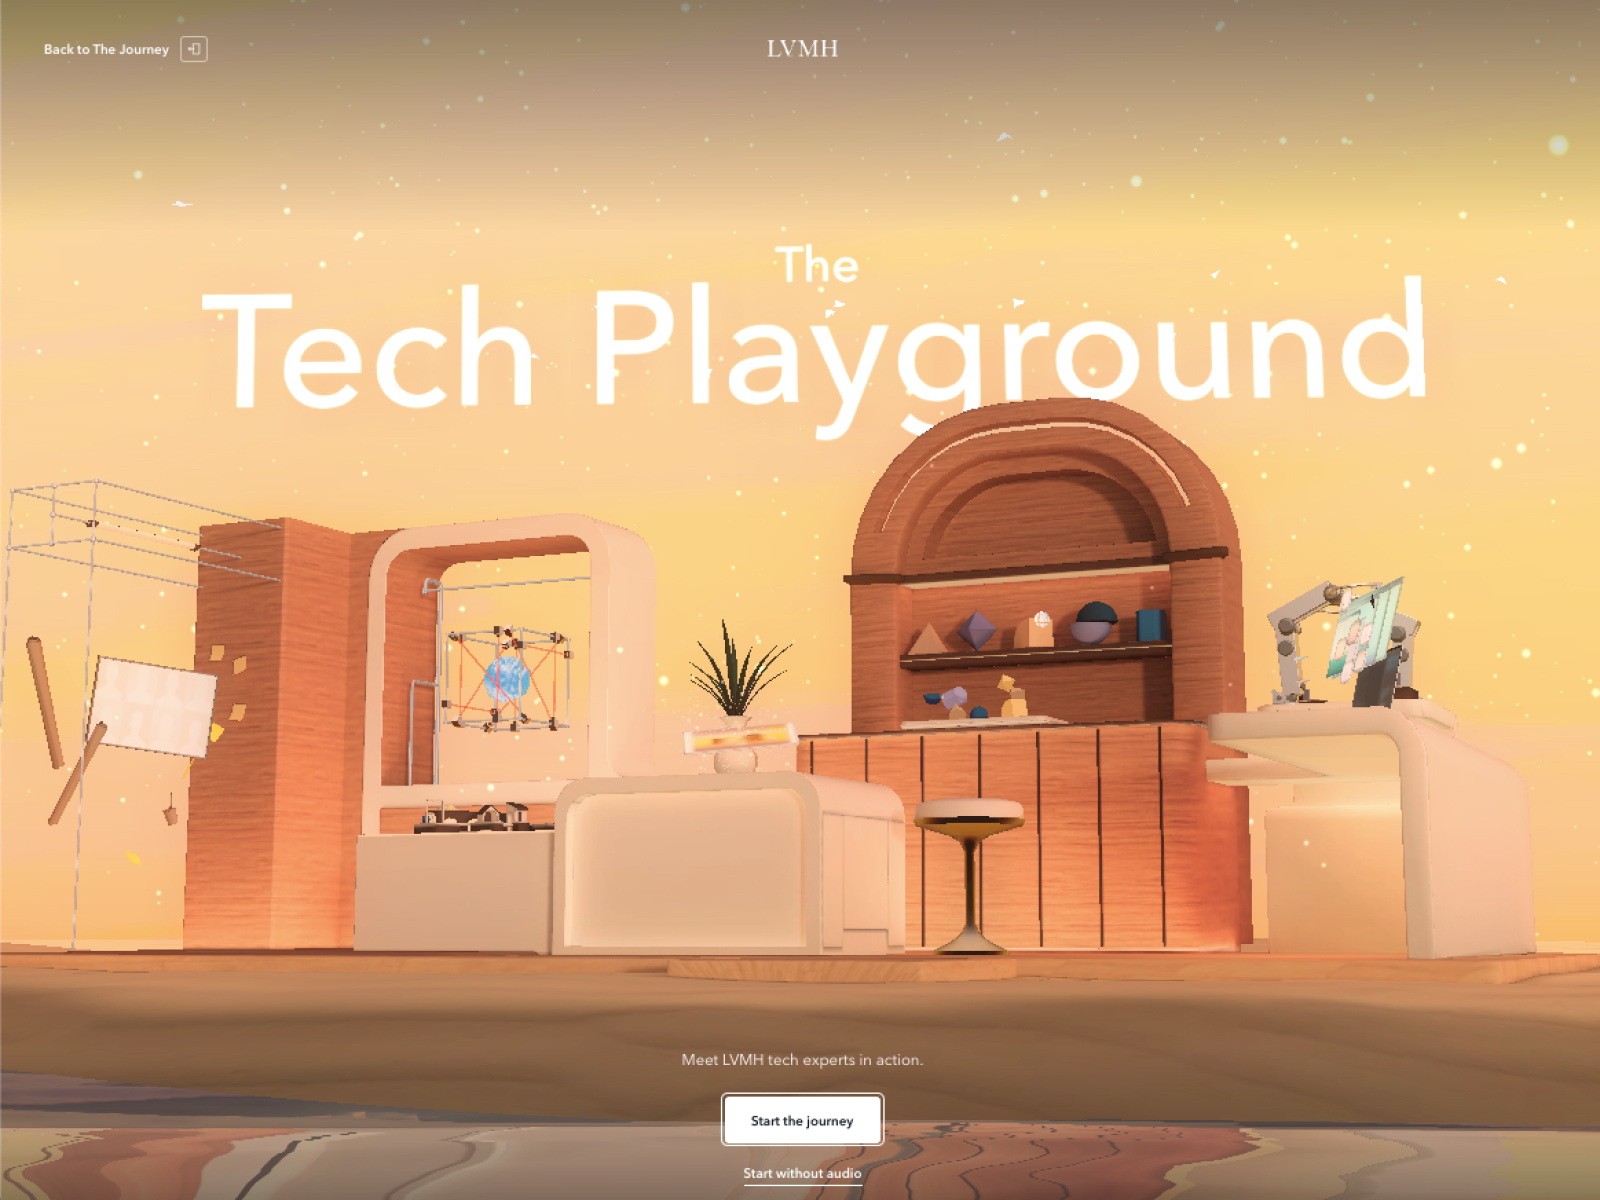 The Tech playground